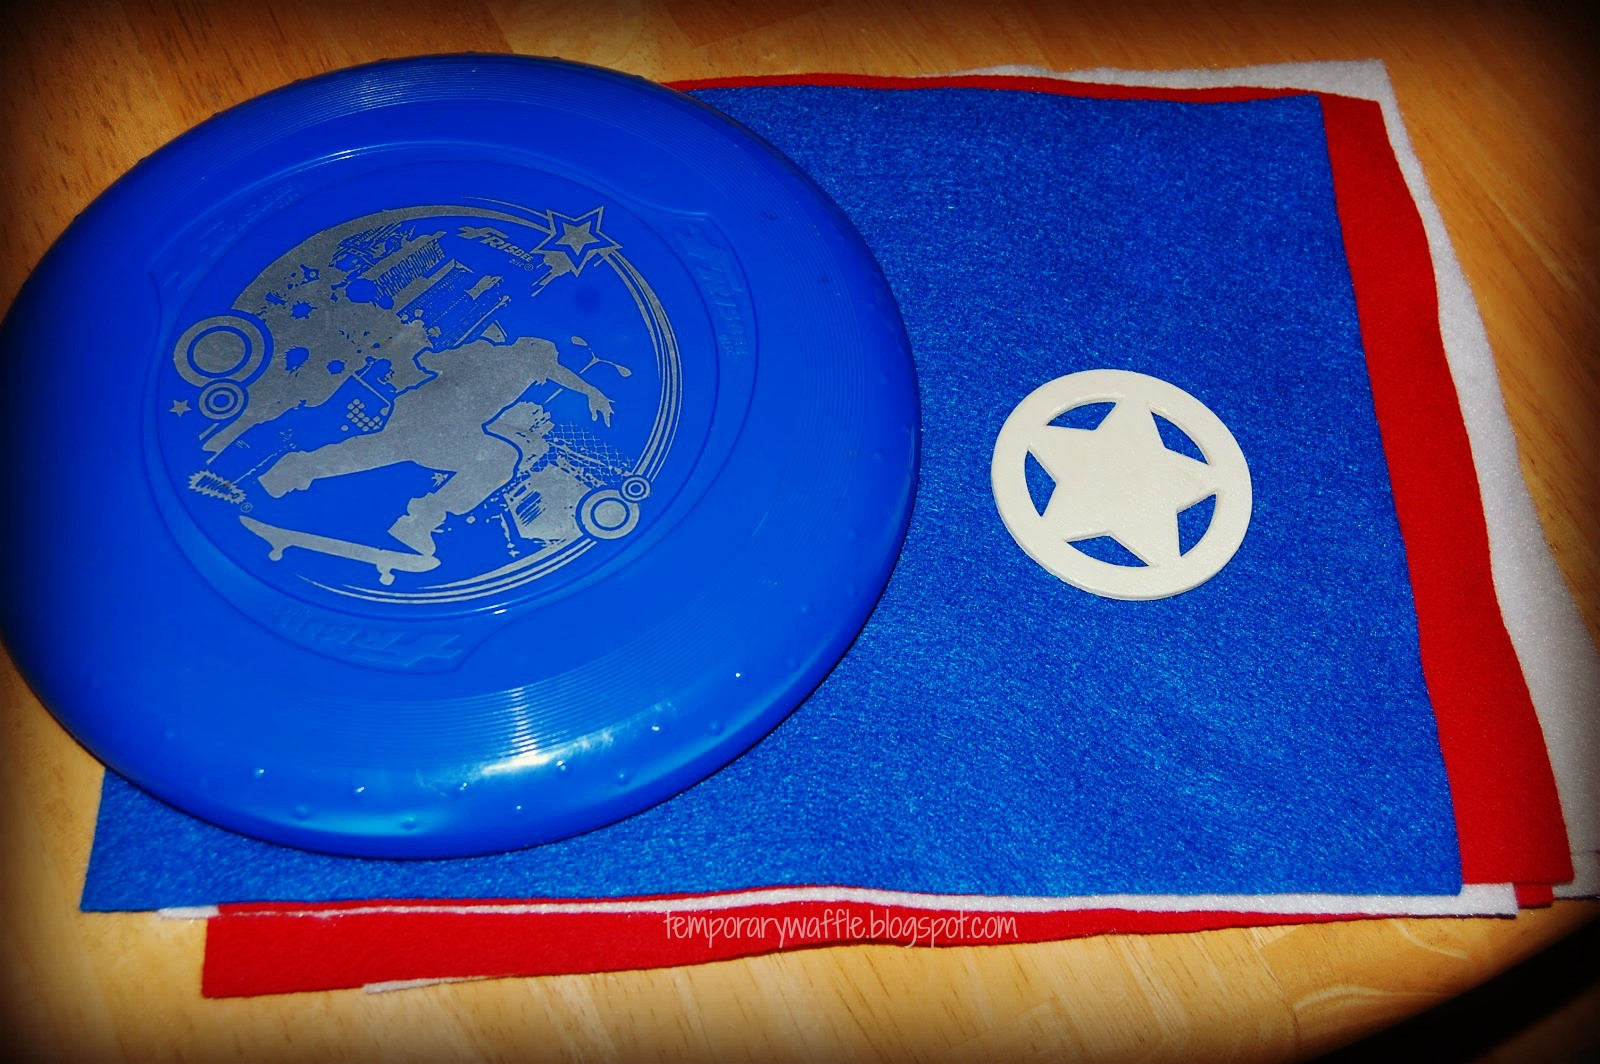 Best ideas about DIY Captain America Shield
. Save or Pin Temporary Waffle DIY Captain America Shield Now.